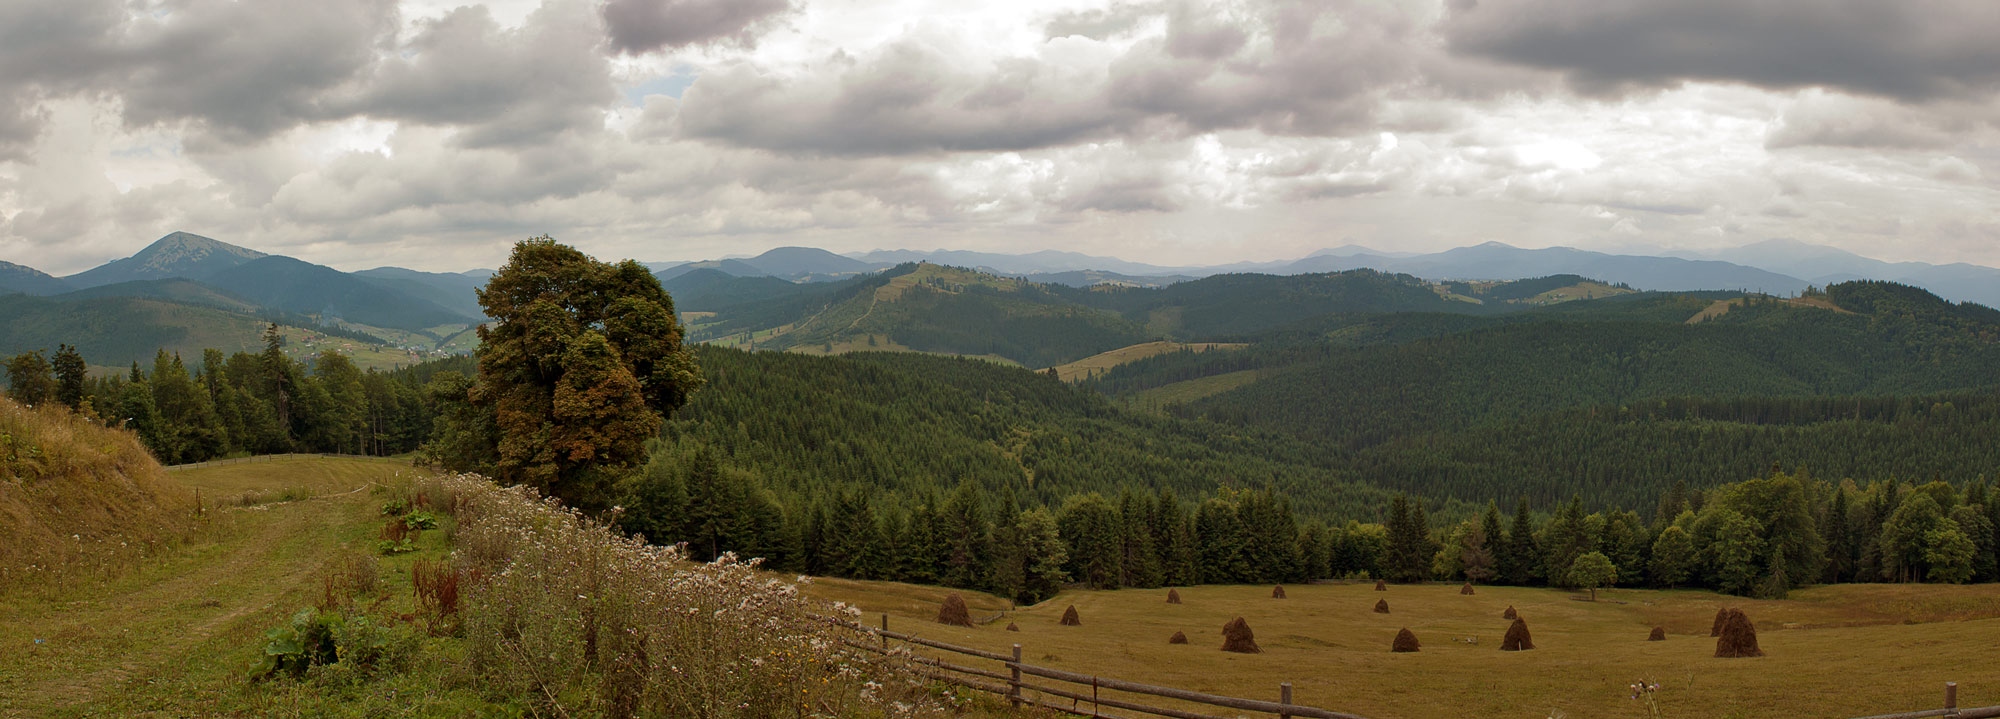 Карпатские горы | Фотограф Александр Войтко | foto.by фото.бай